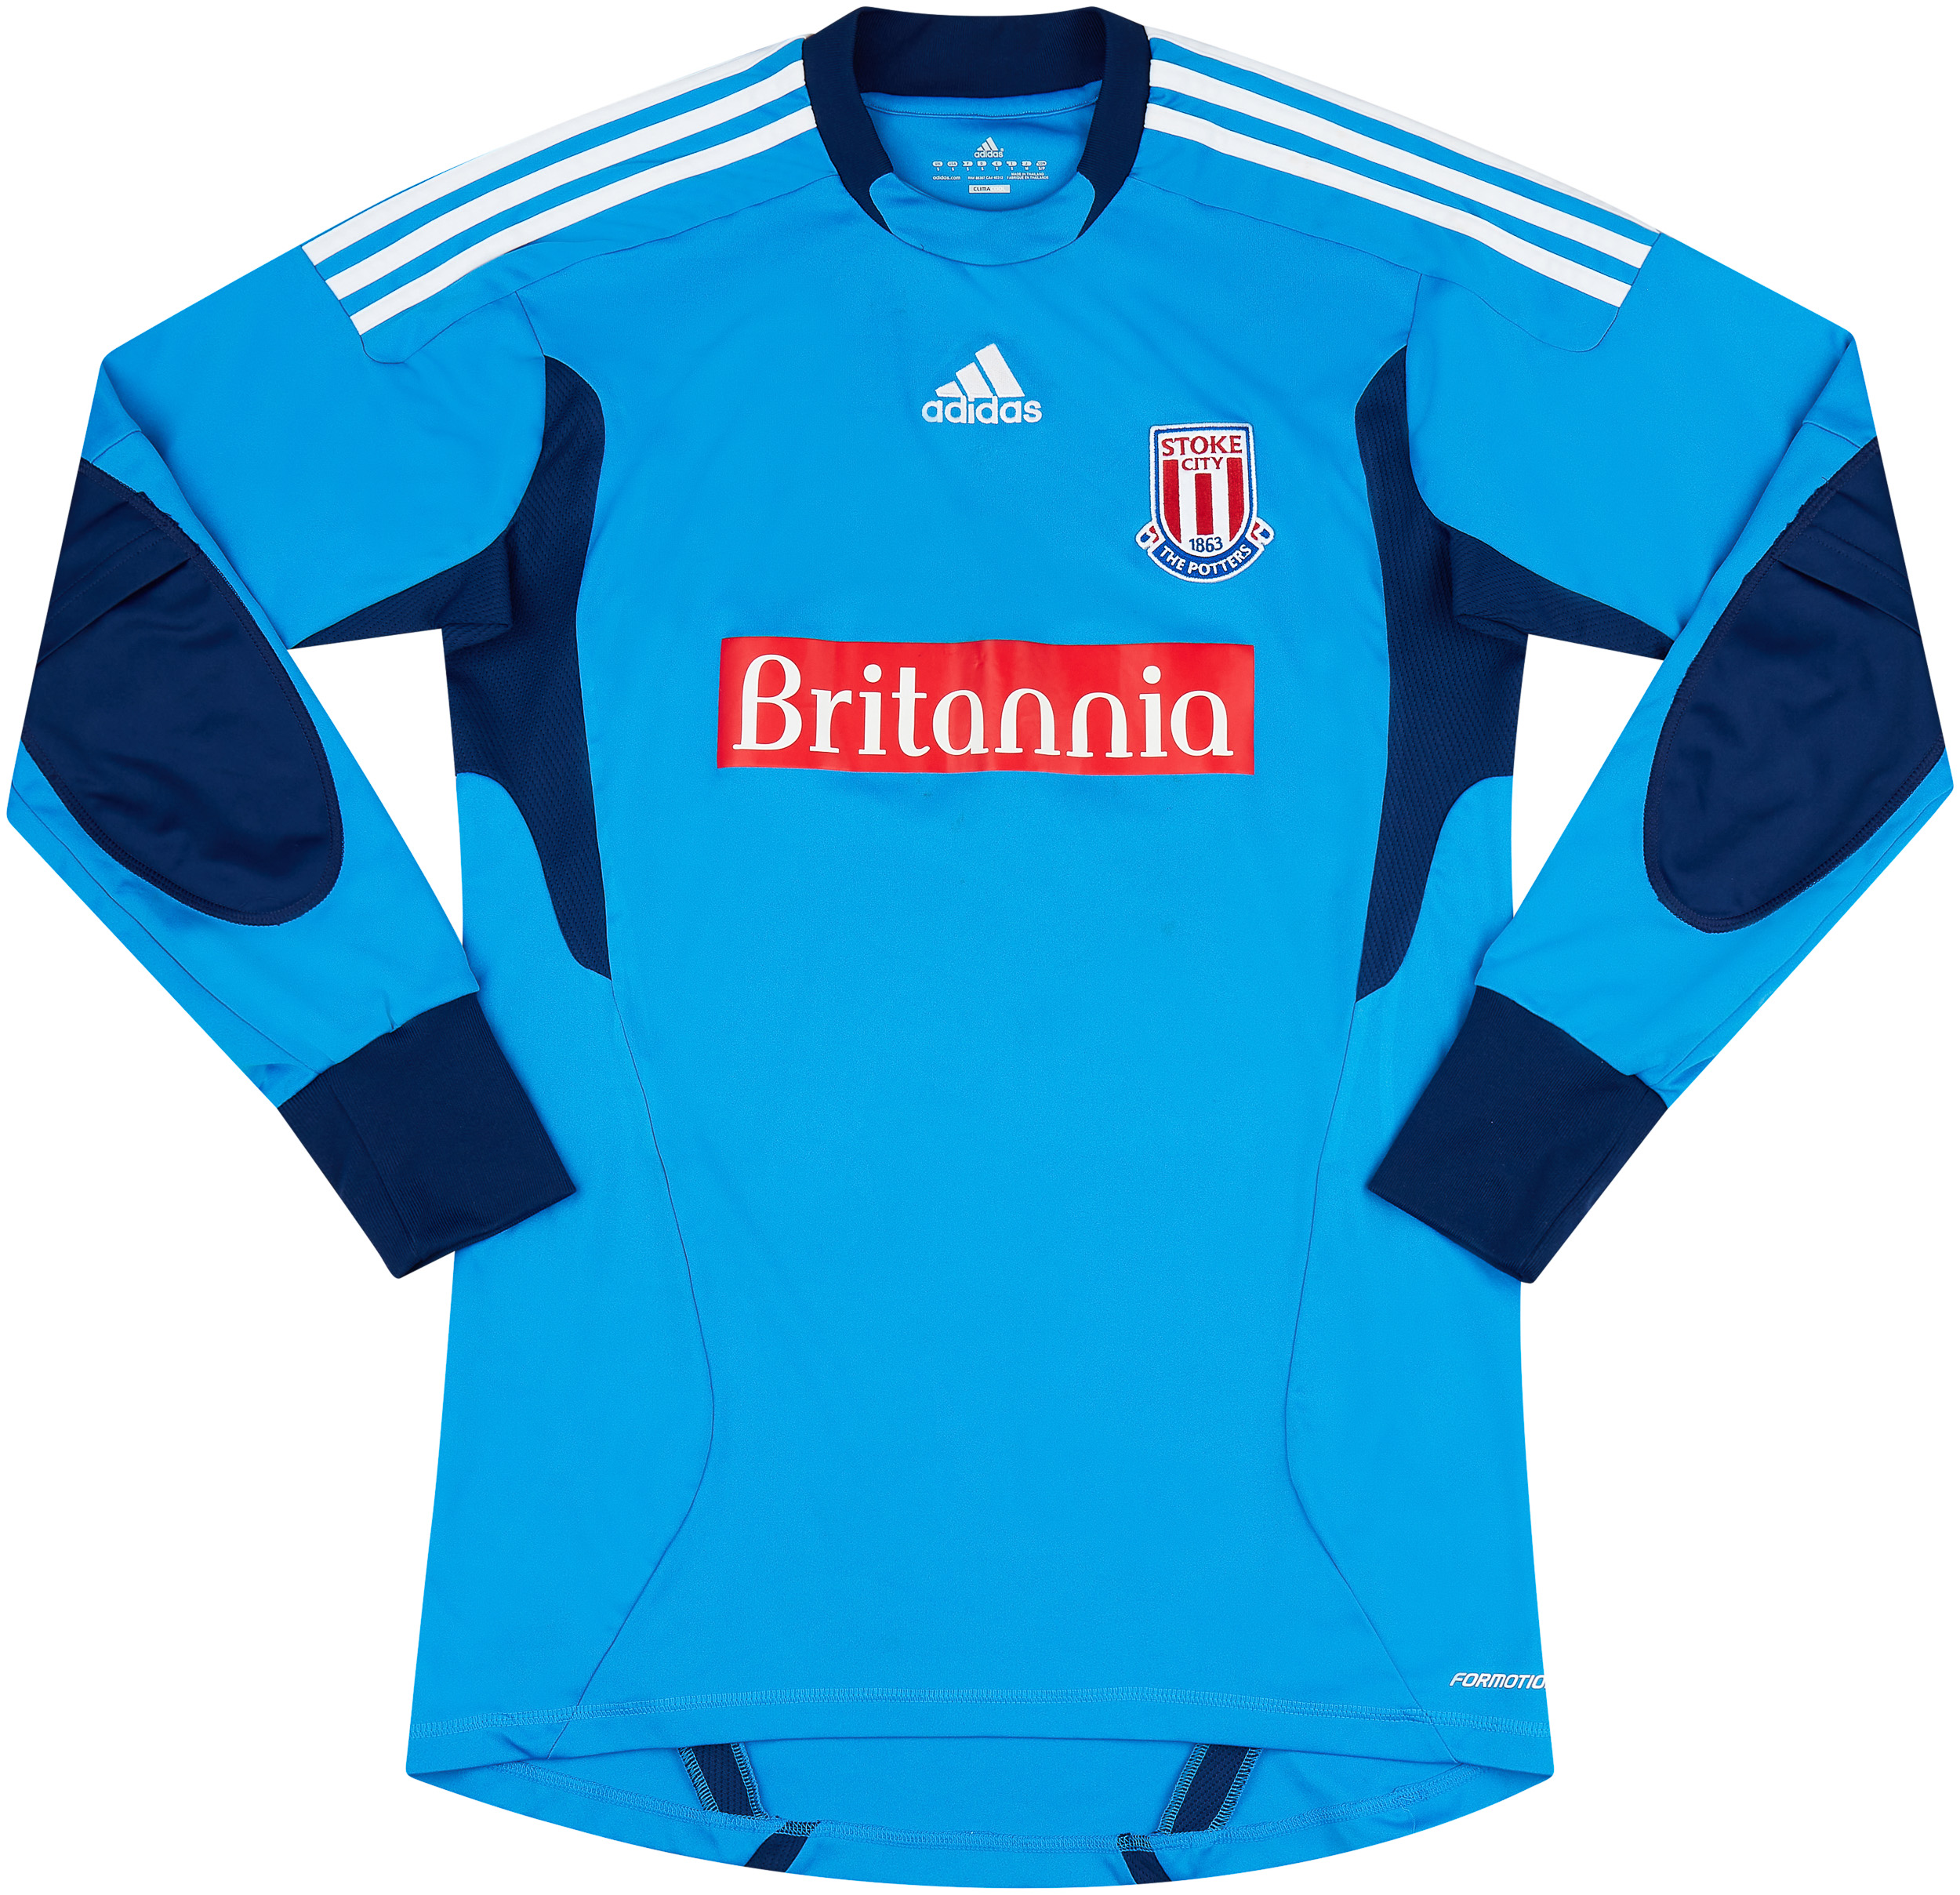 Stoke City  Keeper  shirt  (Original)